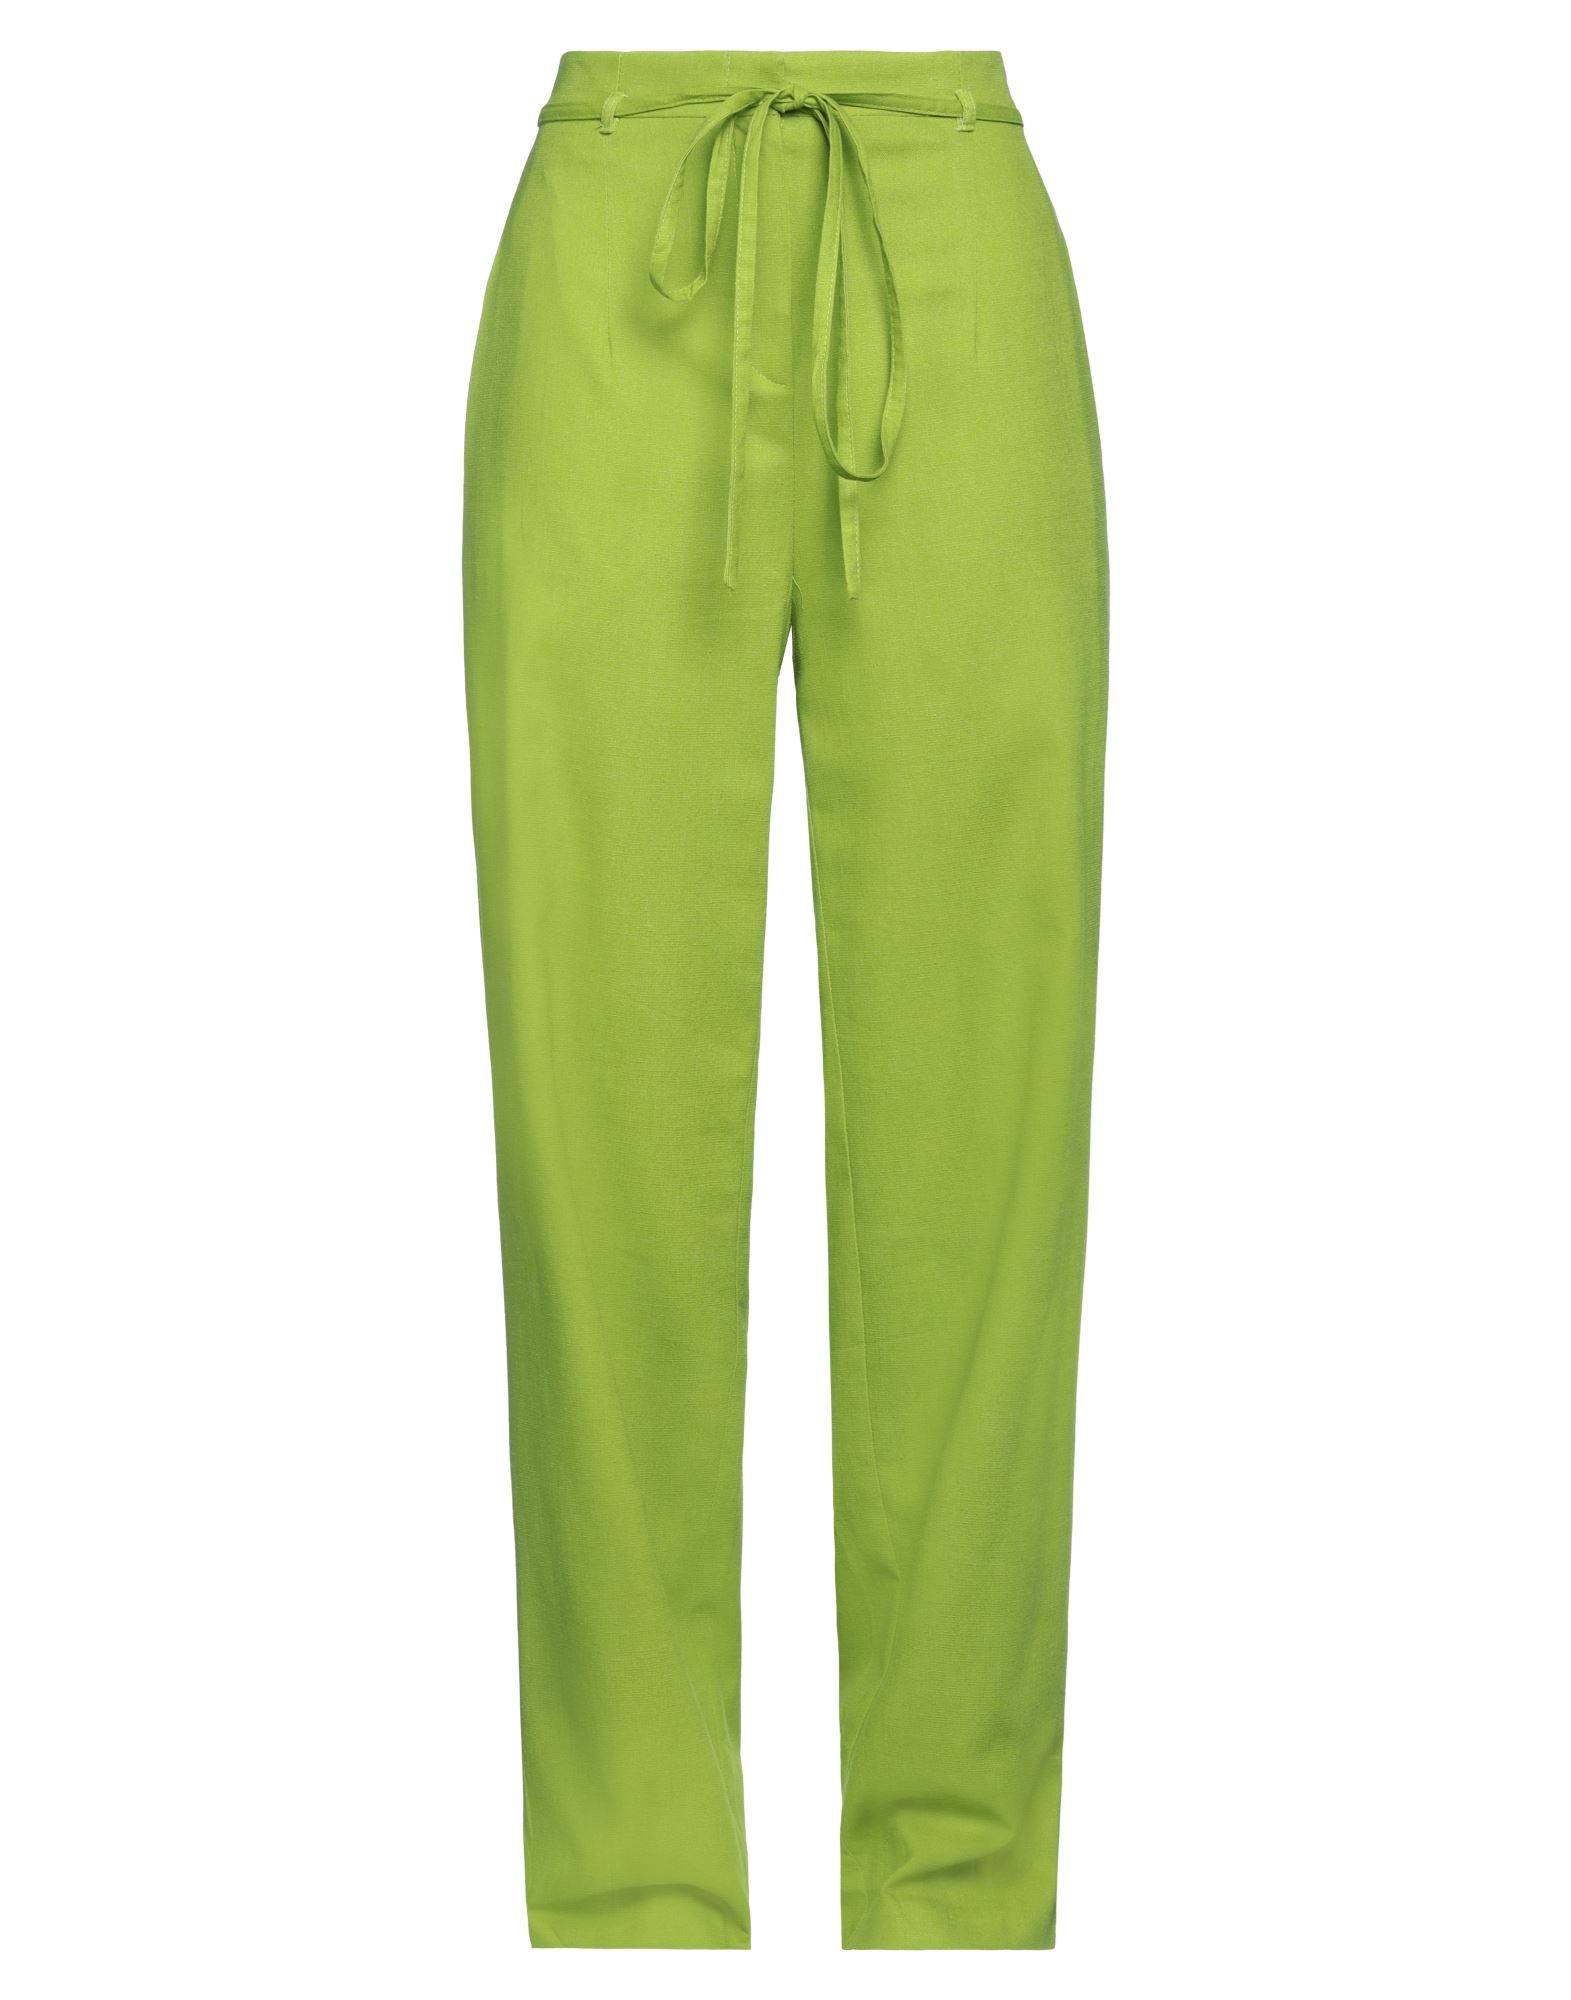 Kaos Pants In Green